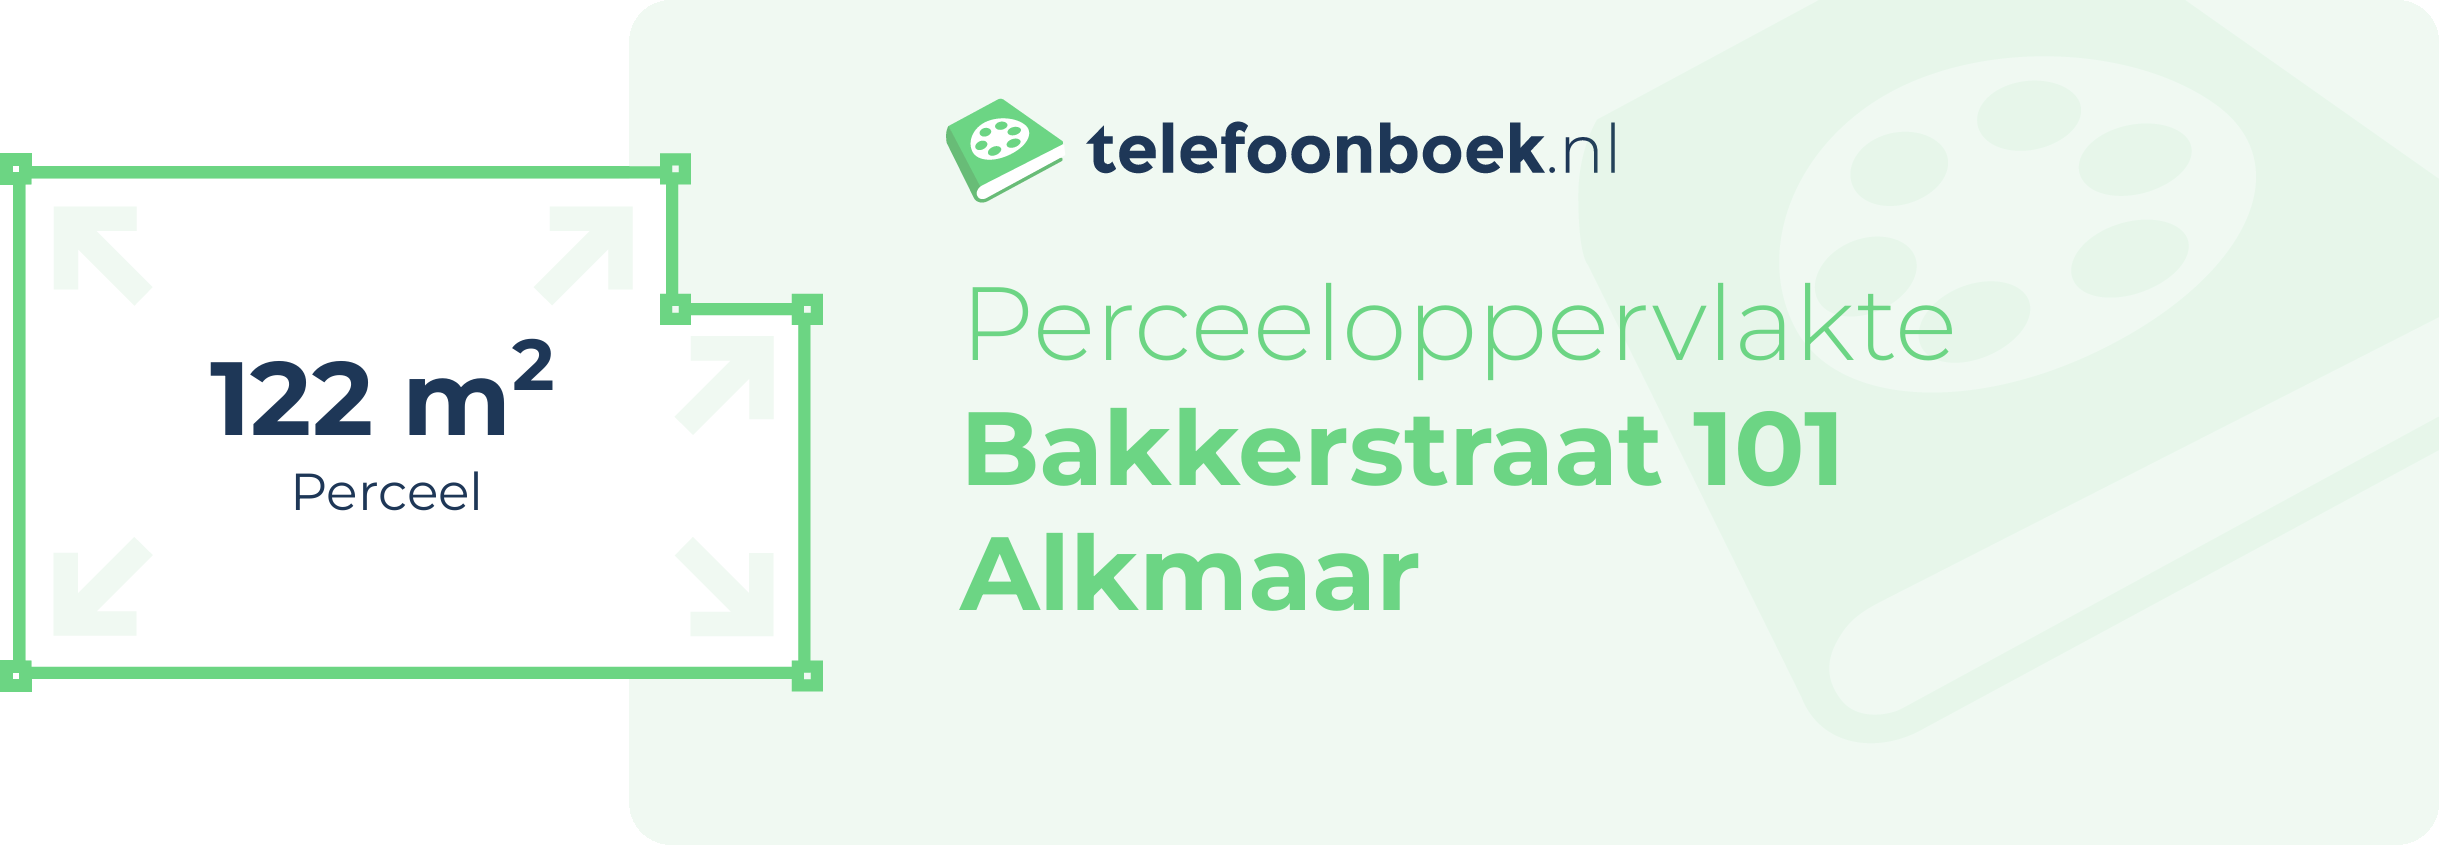 Perceeloppervlakte Bakkerstraat 101 Alkmaar